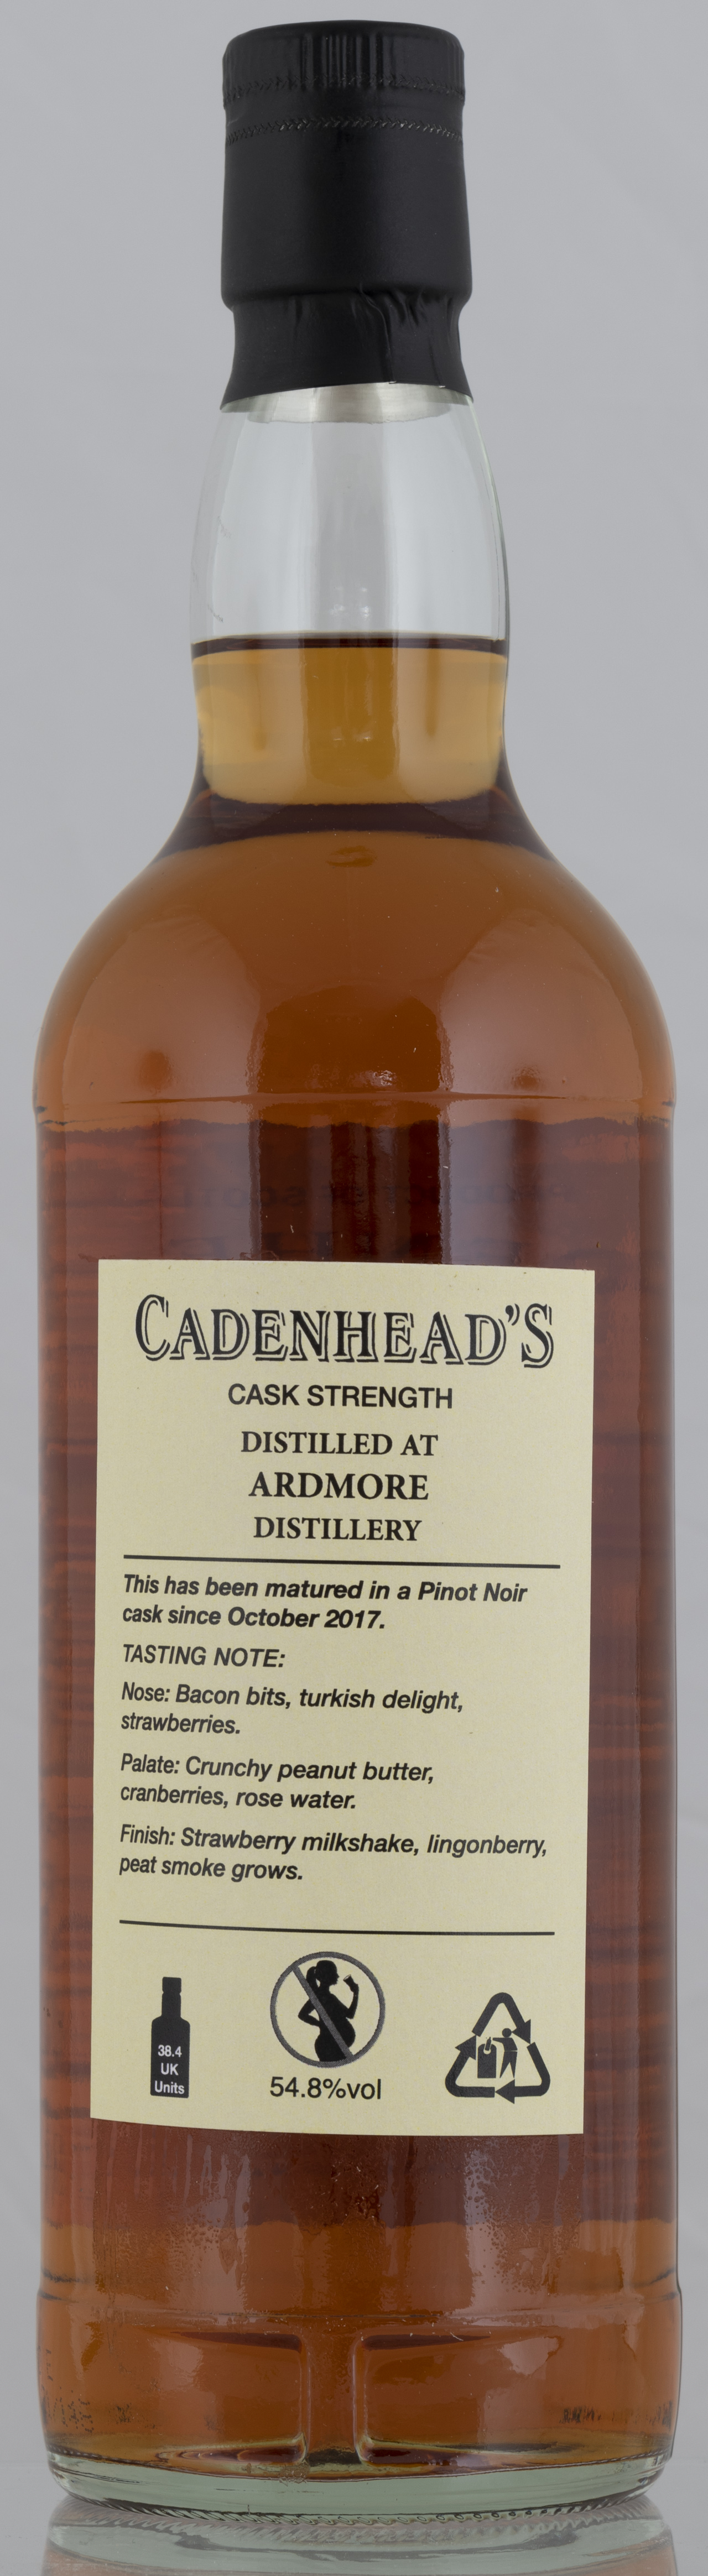 Billede: PHC_7267 - Cadenhead Wine Cask 10 year Ardmore - bottle back.jpg